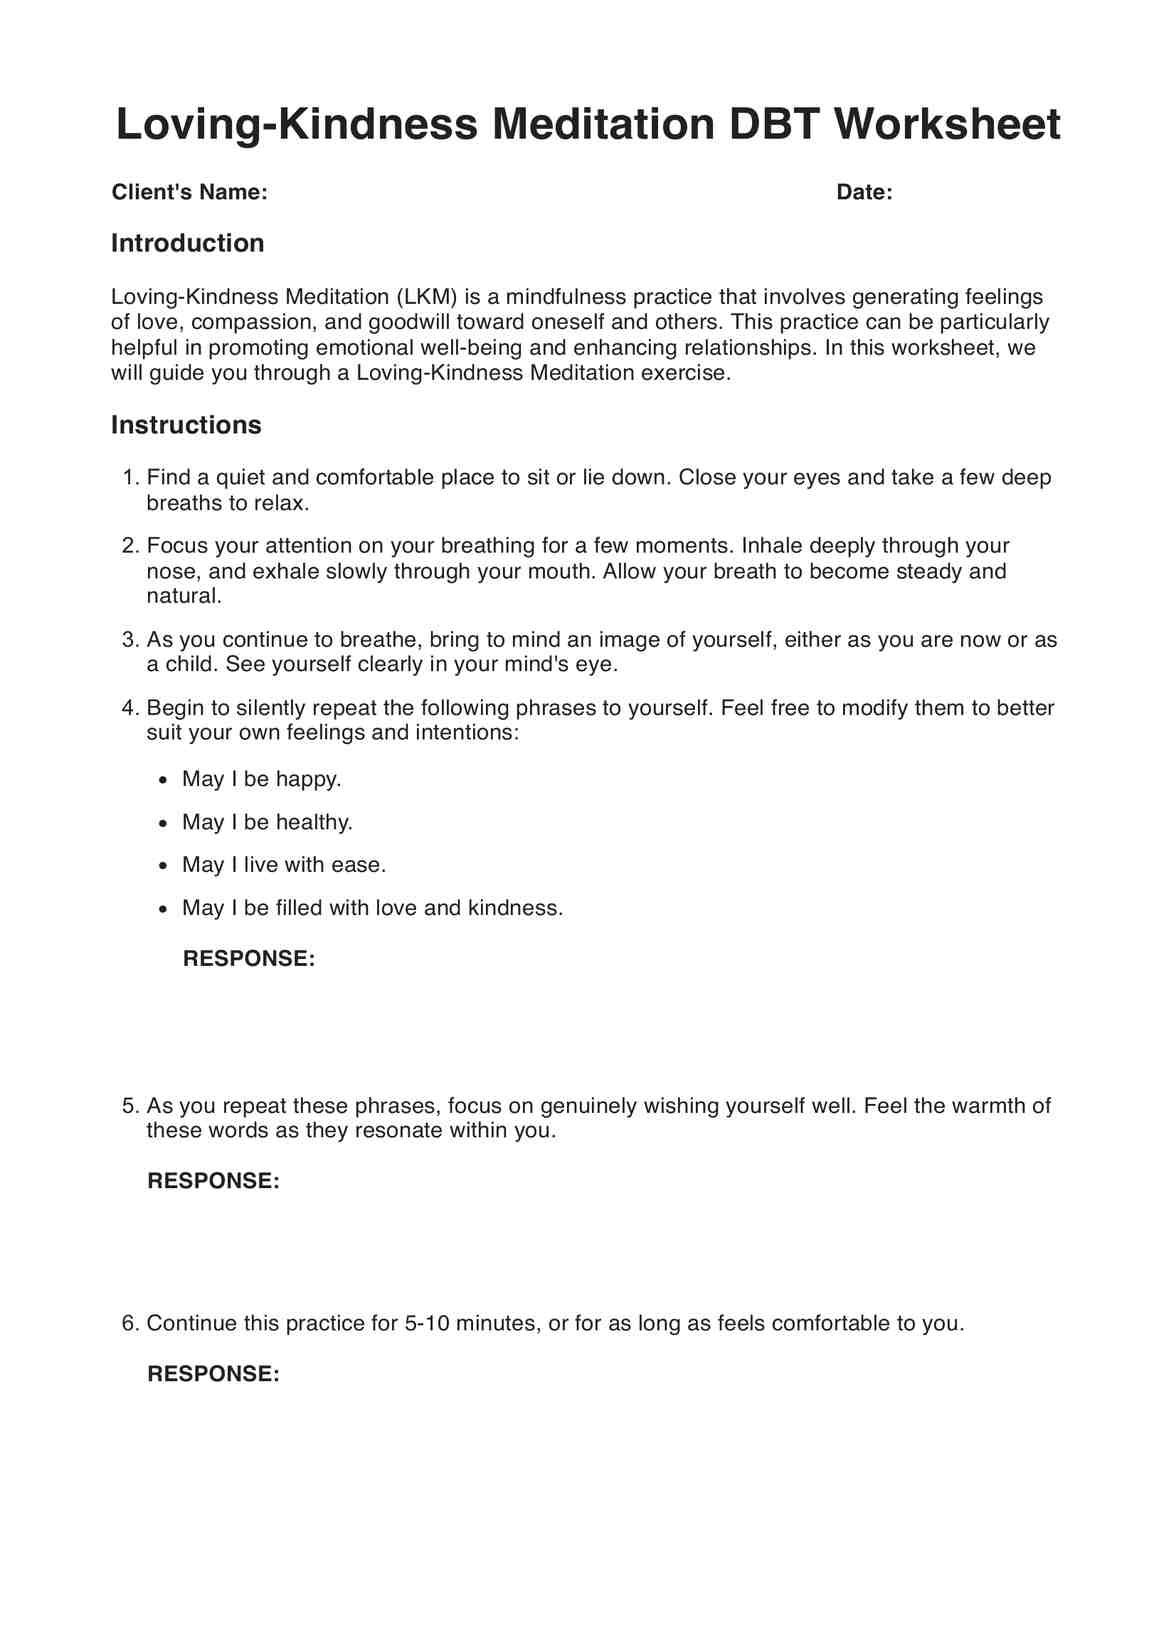 Loving Kindness Meditation DBT Worksheet PDF Example